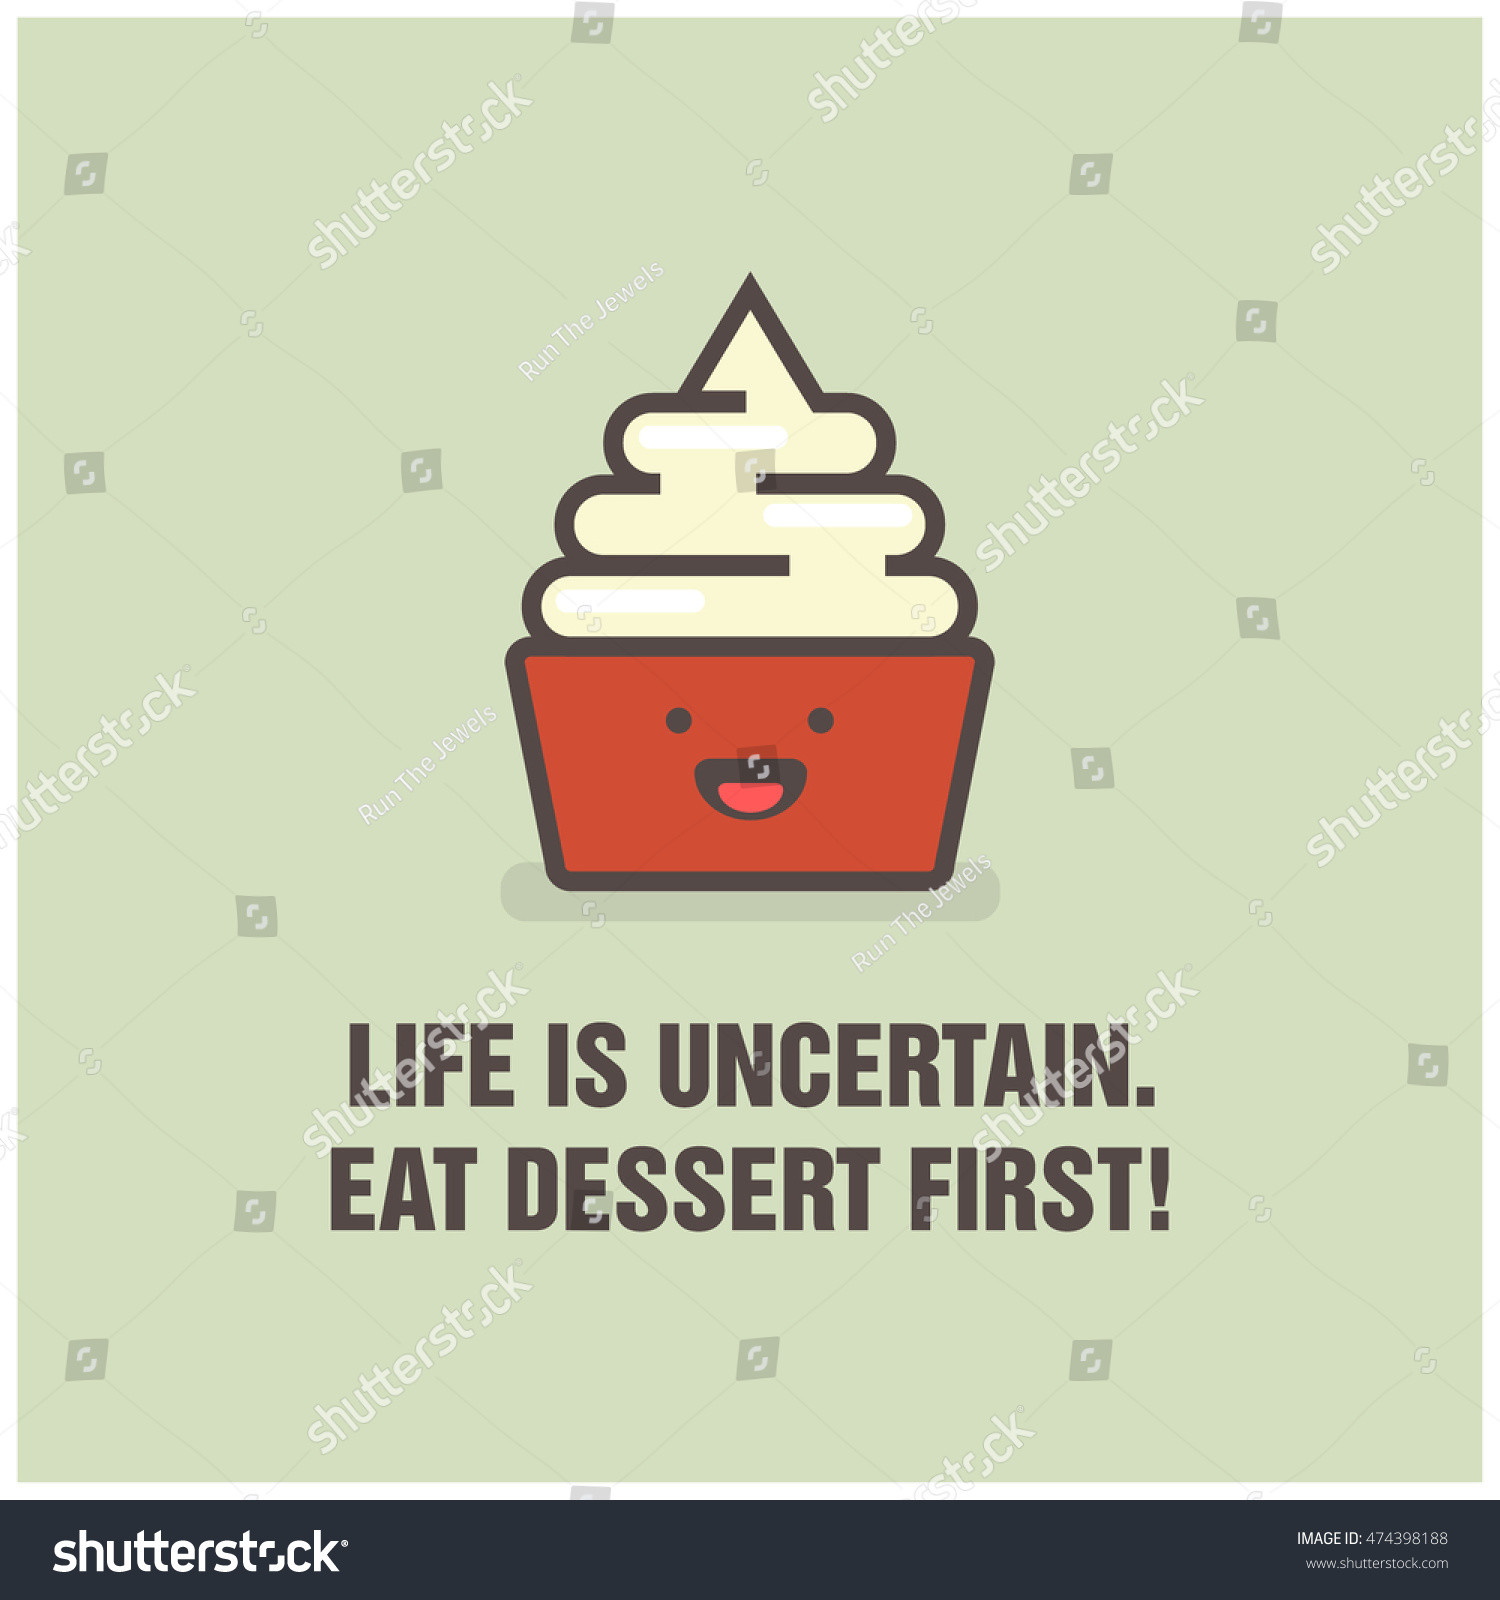 Life Is Uncertain Eat Dessert First
 Life Uncertain Eat Dessert First Frozen Stock Vector